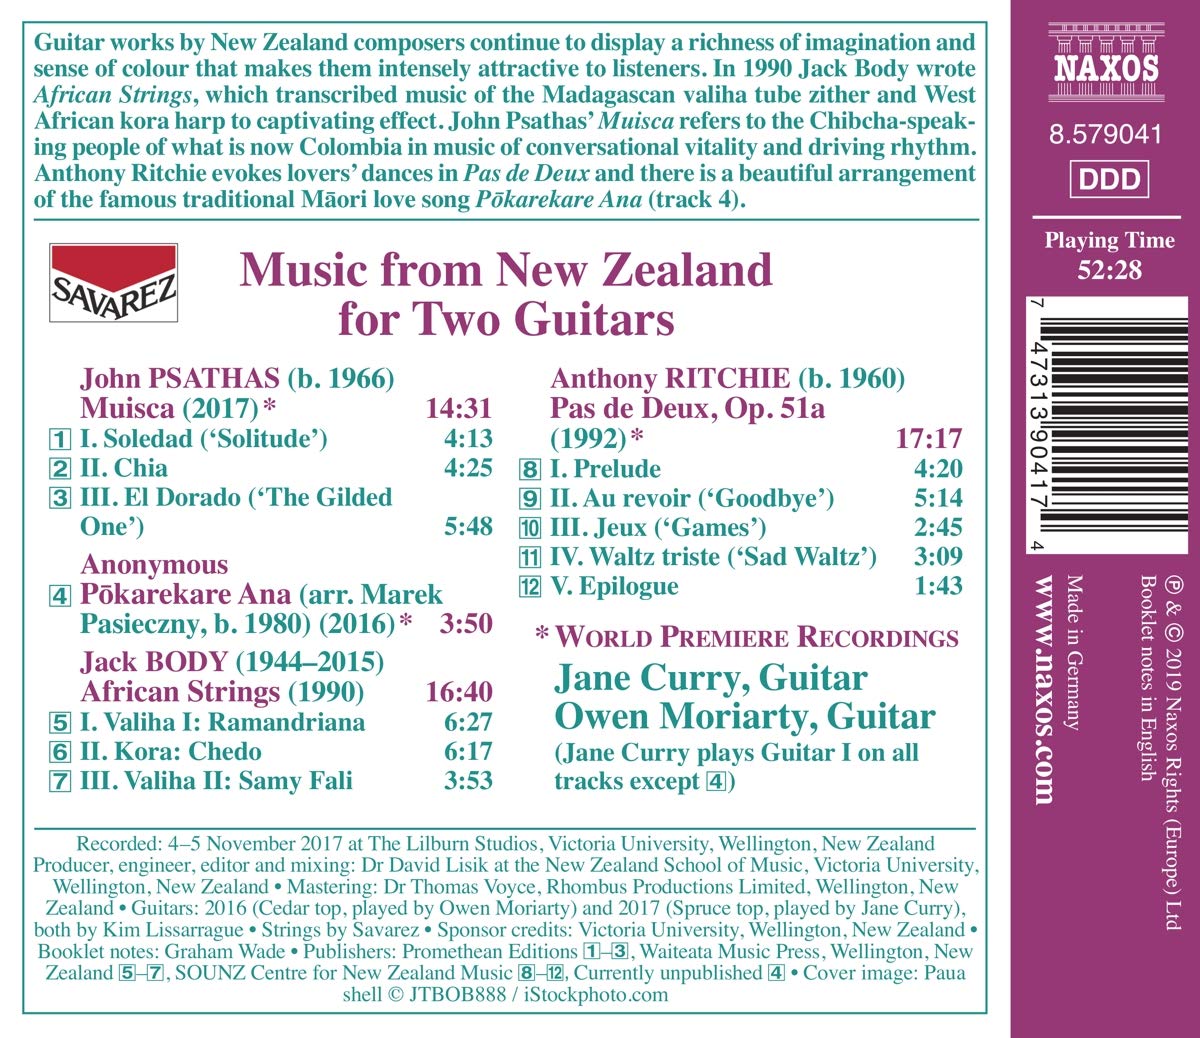 Jane Curry / Owen Moriarty 뉴질랜드 작곡가들의 두 대의 기타를 위한 작품집 (Music from New Zealand for Two Guitars)